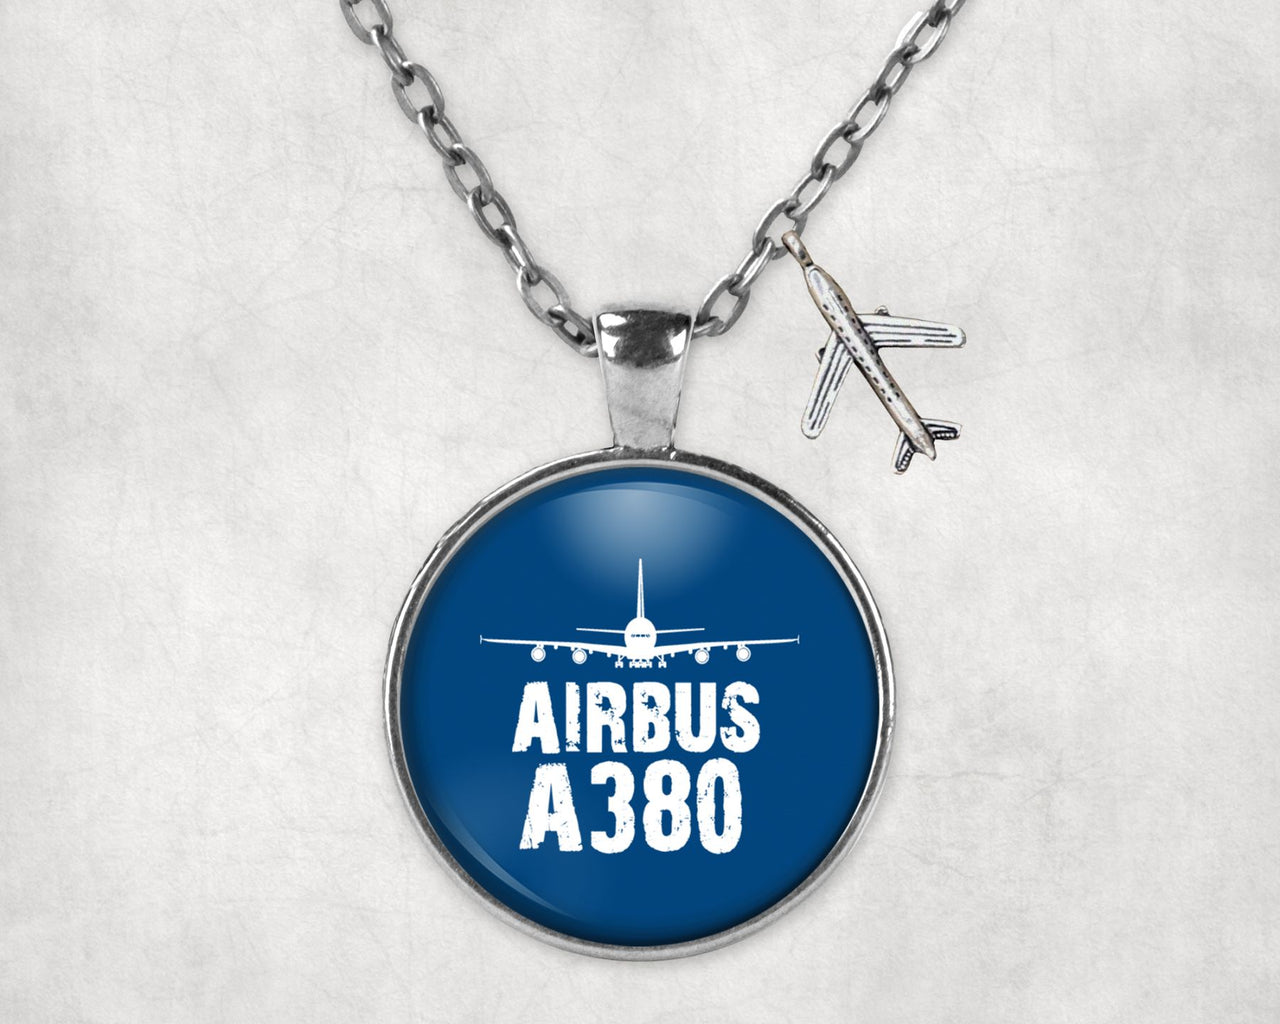 Airbus A380 & Plane Designed Necklaces